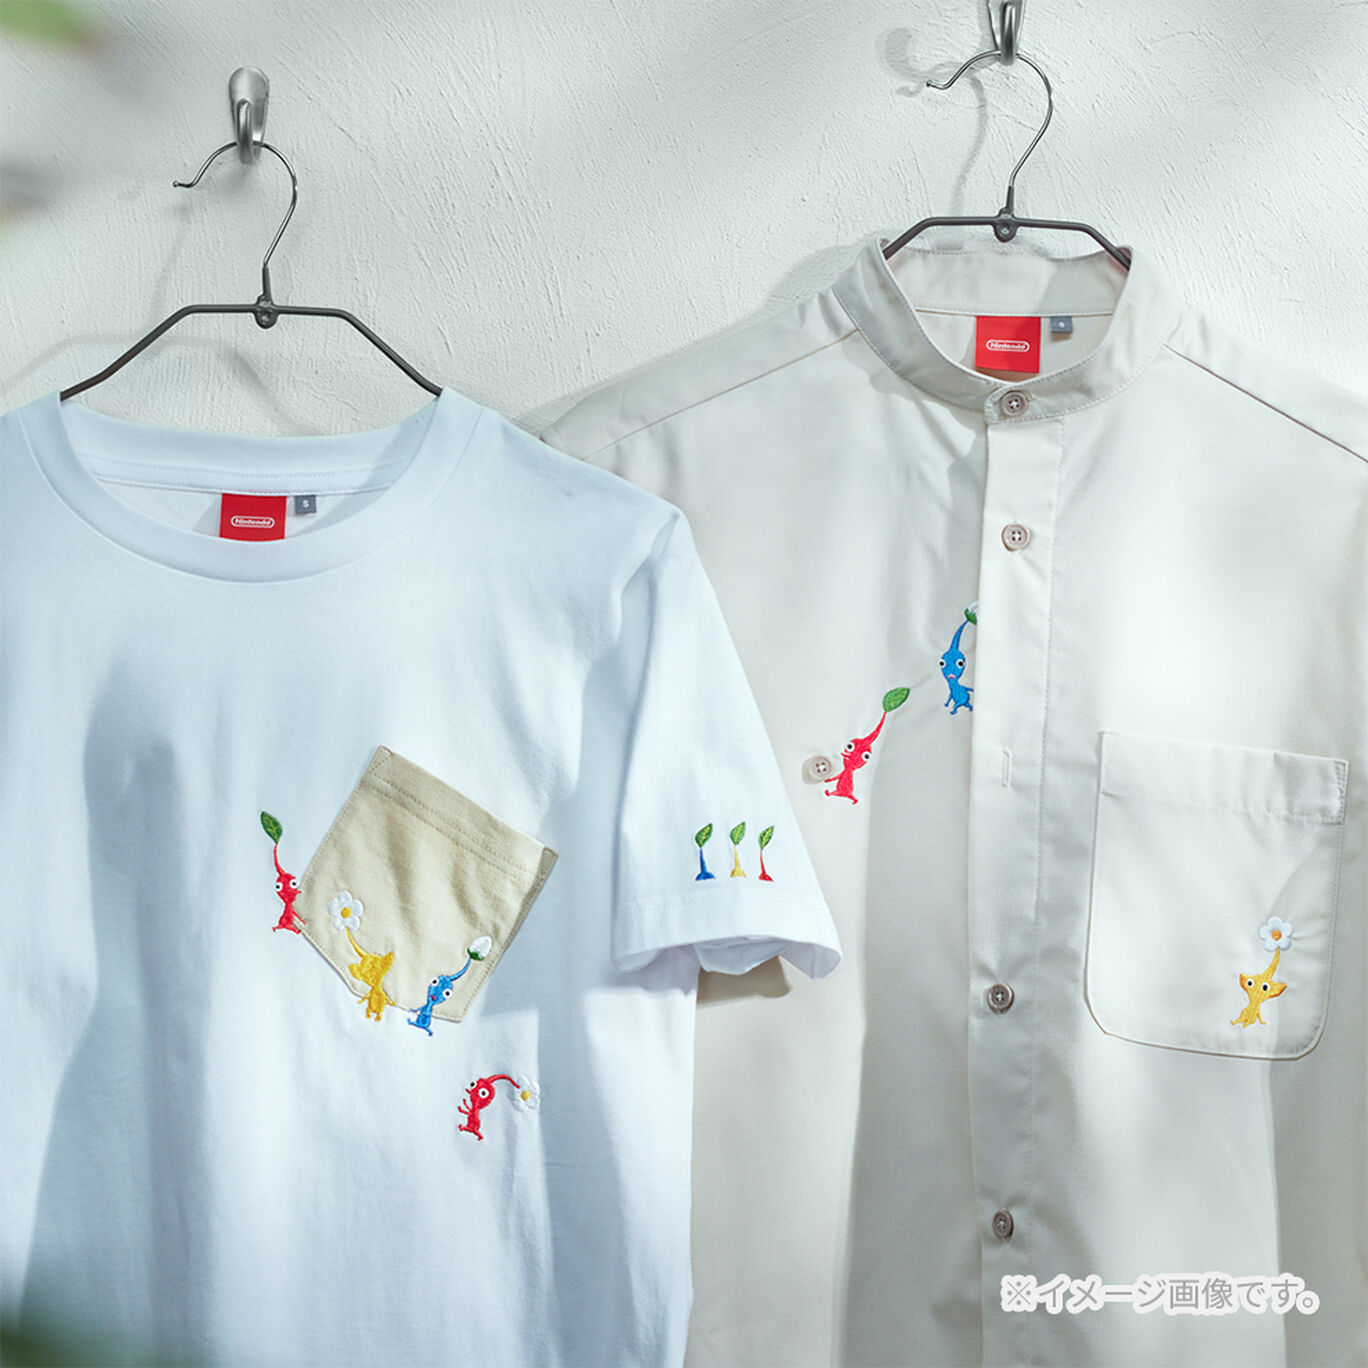 Tシャツ お宝回収 130 PIKMIN【Nintendo TOKYO取り扱い商品】